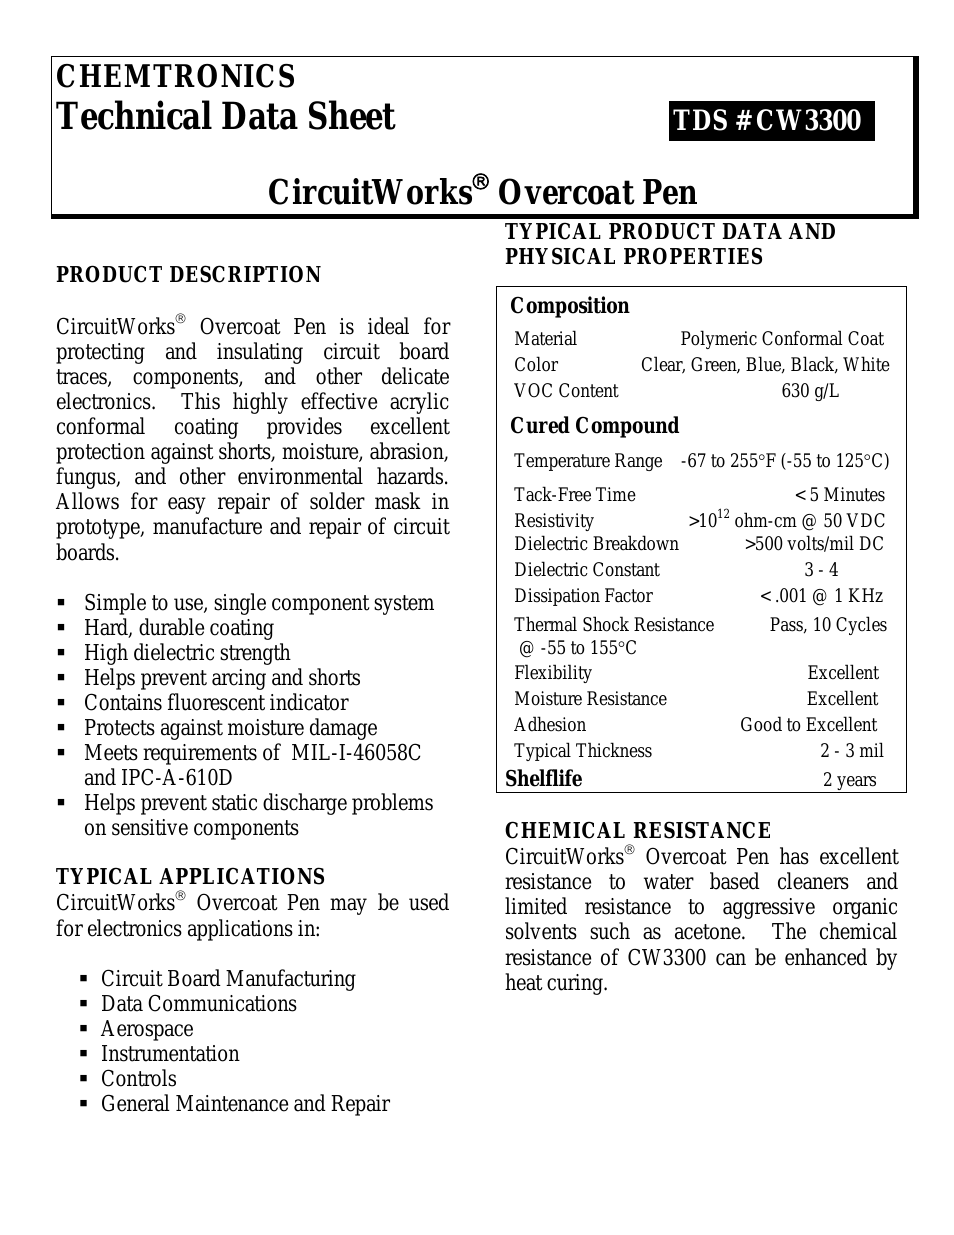 CircuitWorks Overcoat Pen (Black) CW3300